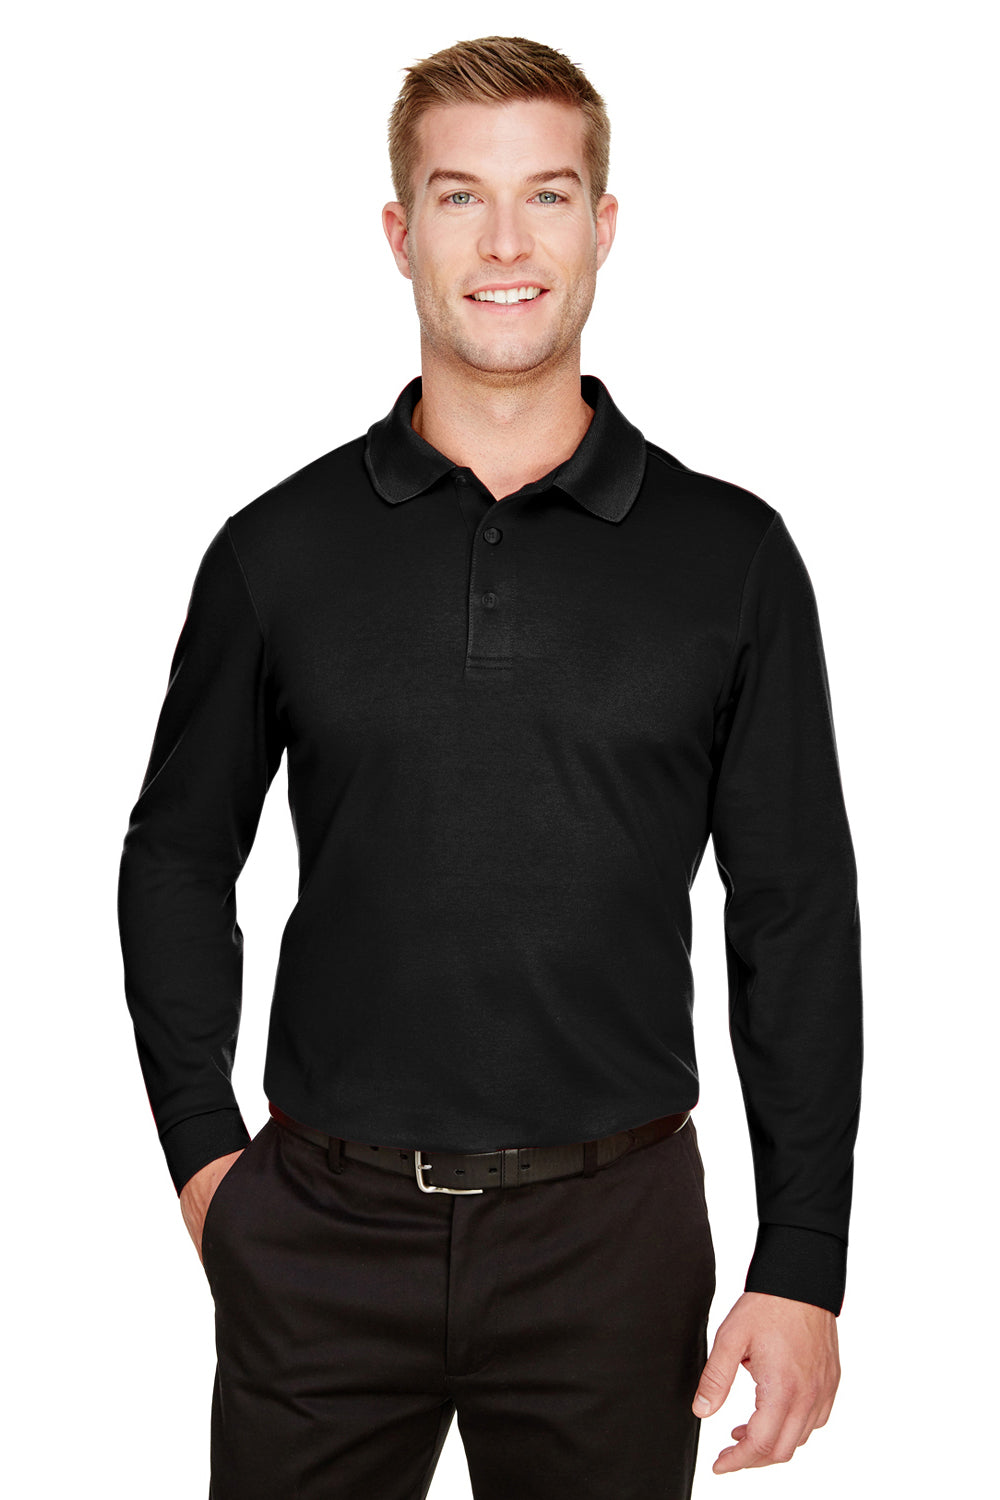 Devon & Jones Mens CrownLux Performance Moisture Wicking Long Sleeve Polo Shirt - Black